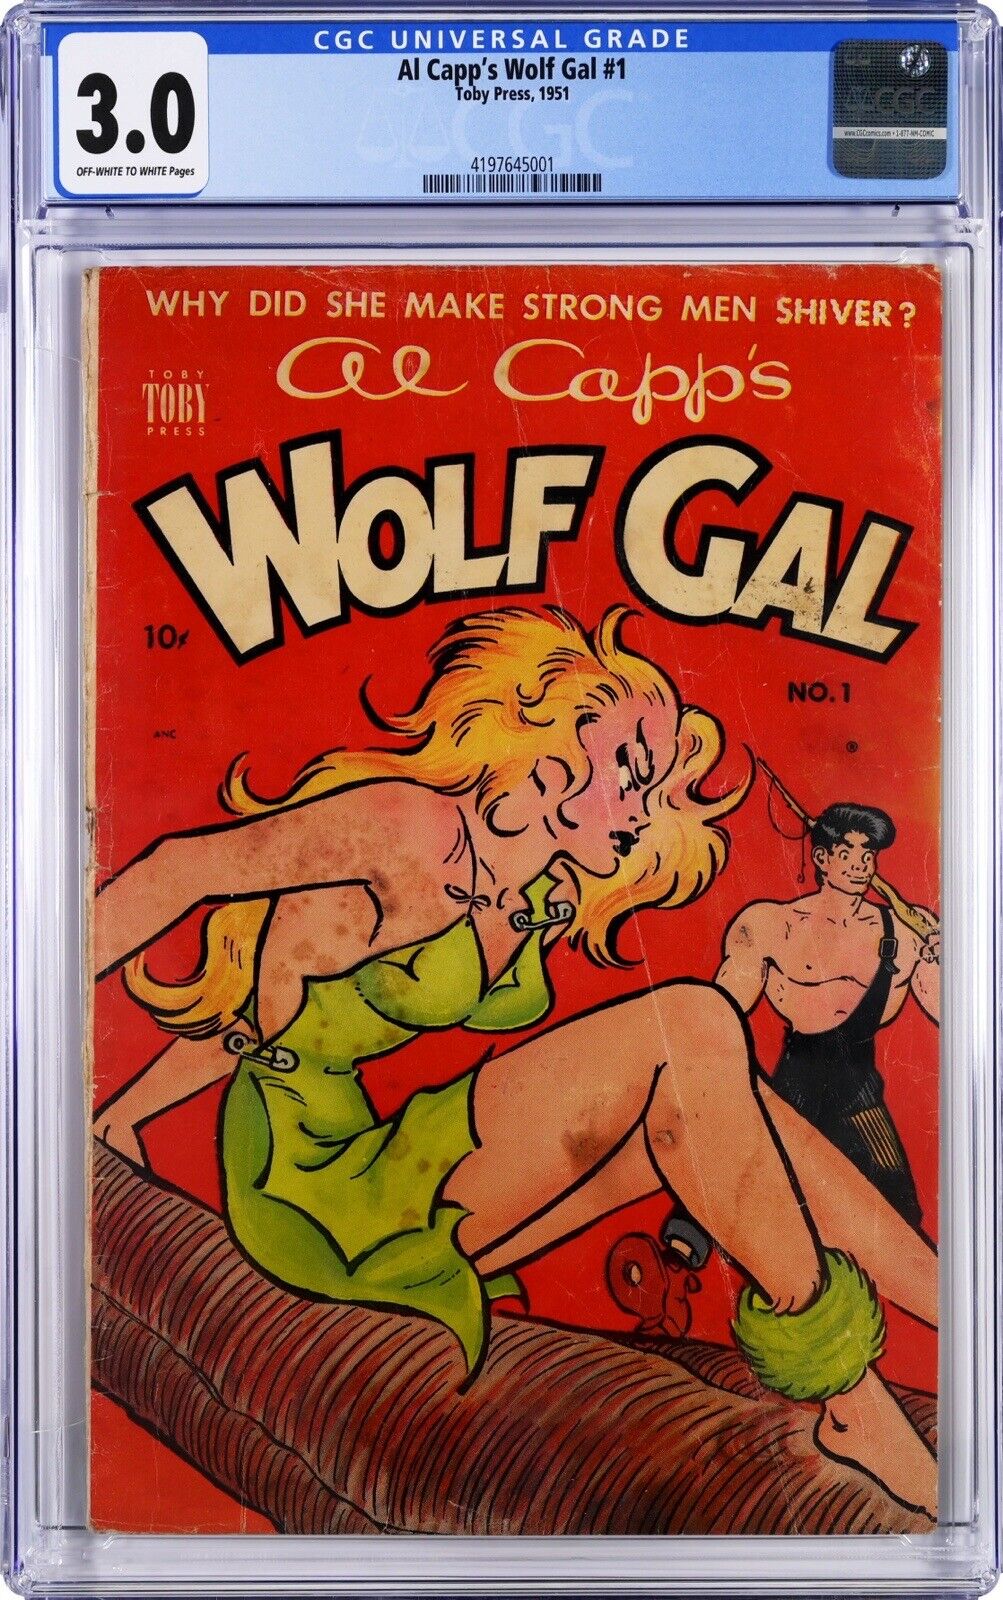 AL CAPP’S WOLF GAL # 1 - TOBY PRESS - 1951 ISSUE - CGC 3.0